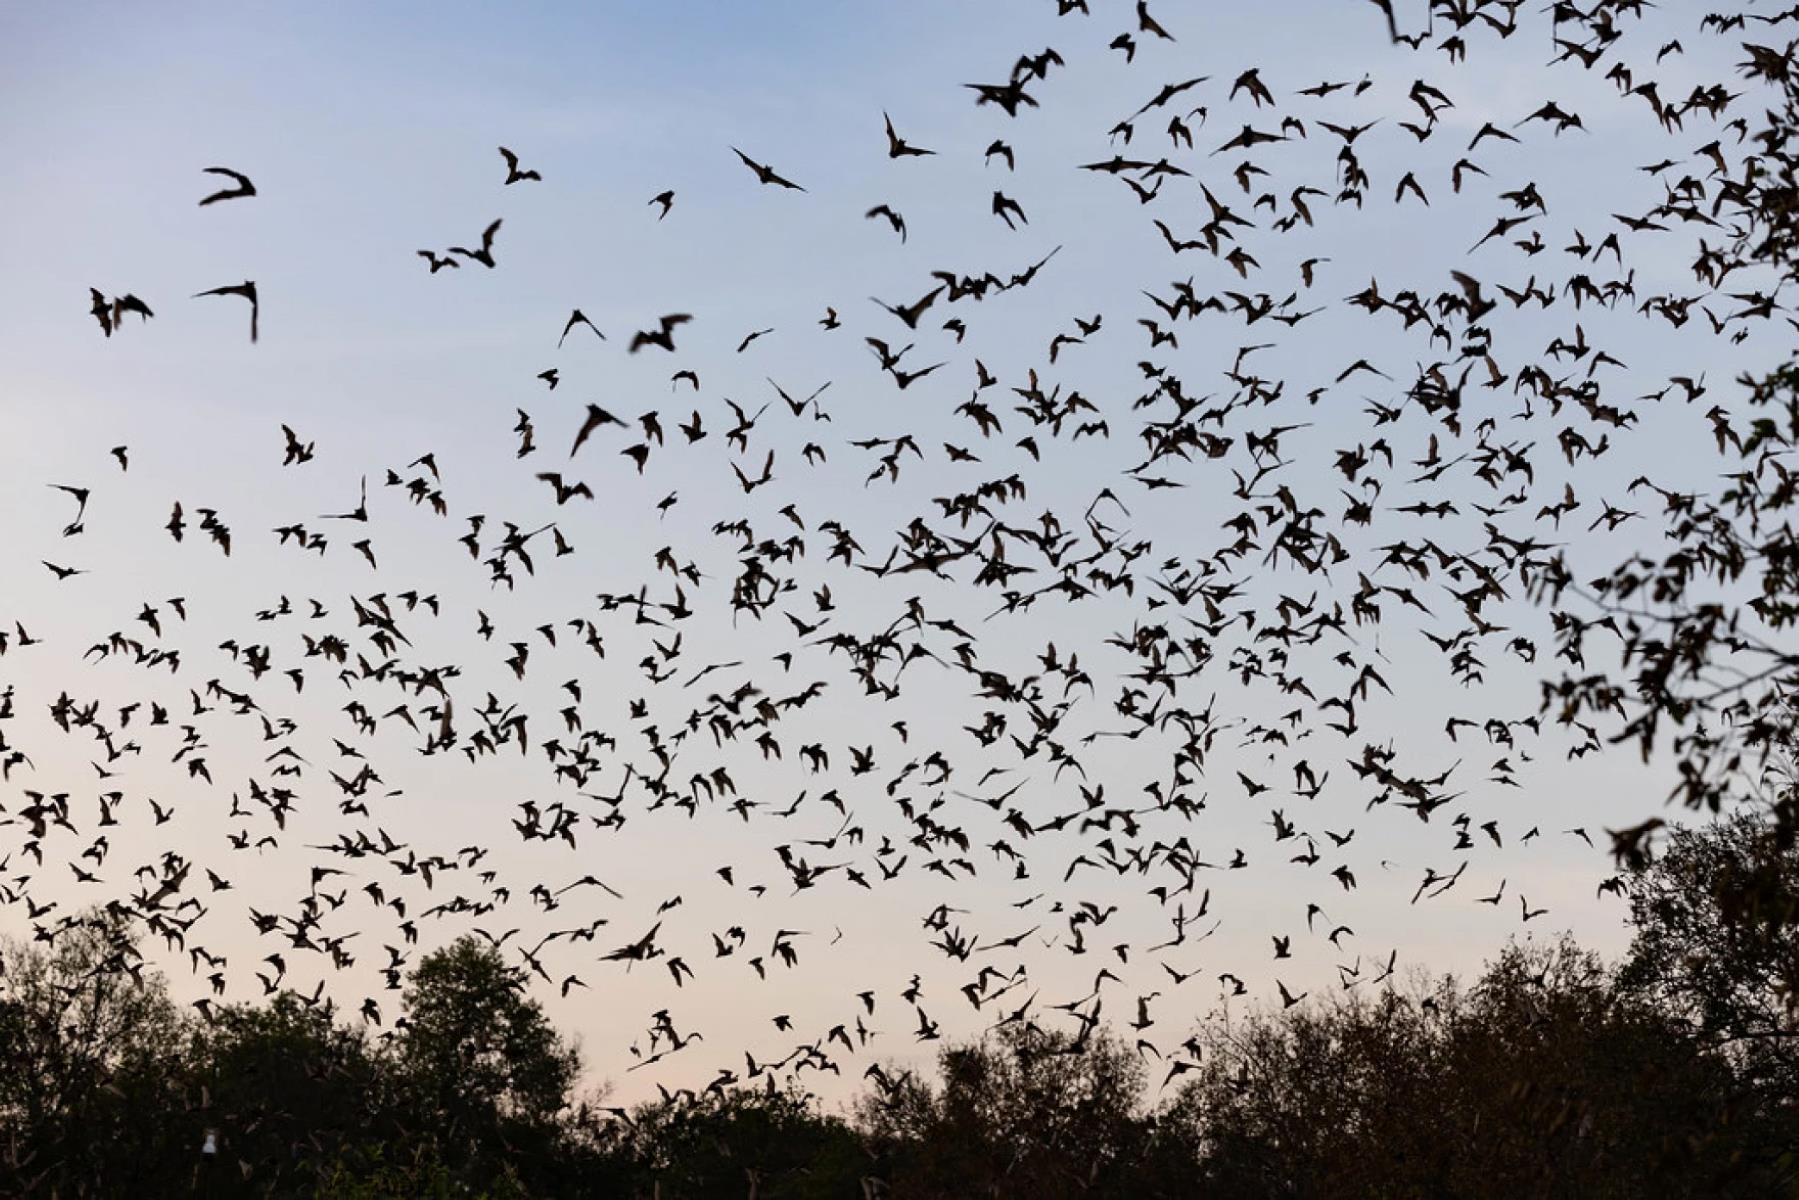 Mysterious Bat Invasion: What It Means When Bats Swarm Your House